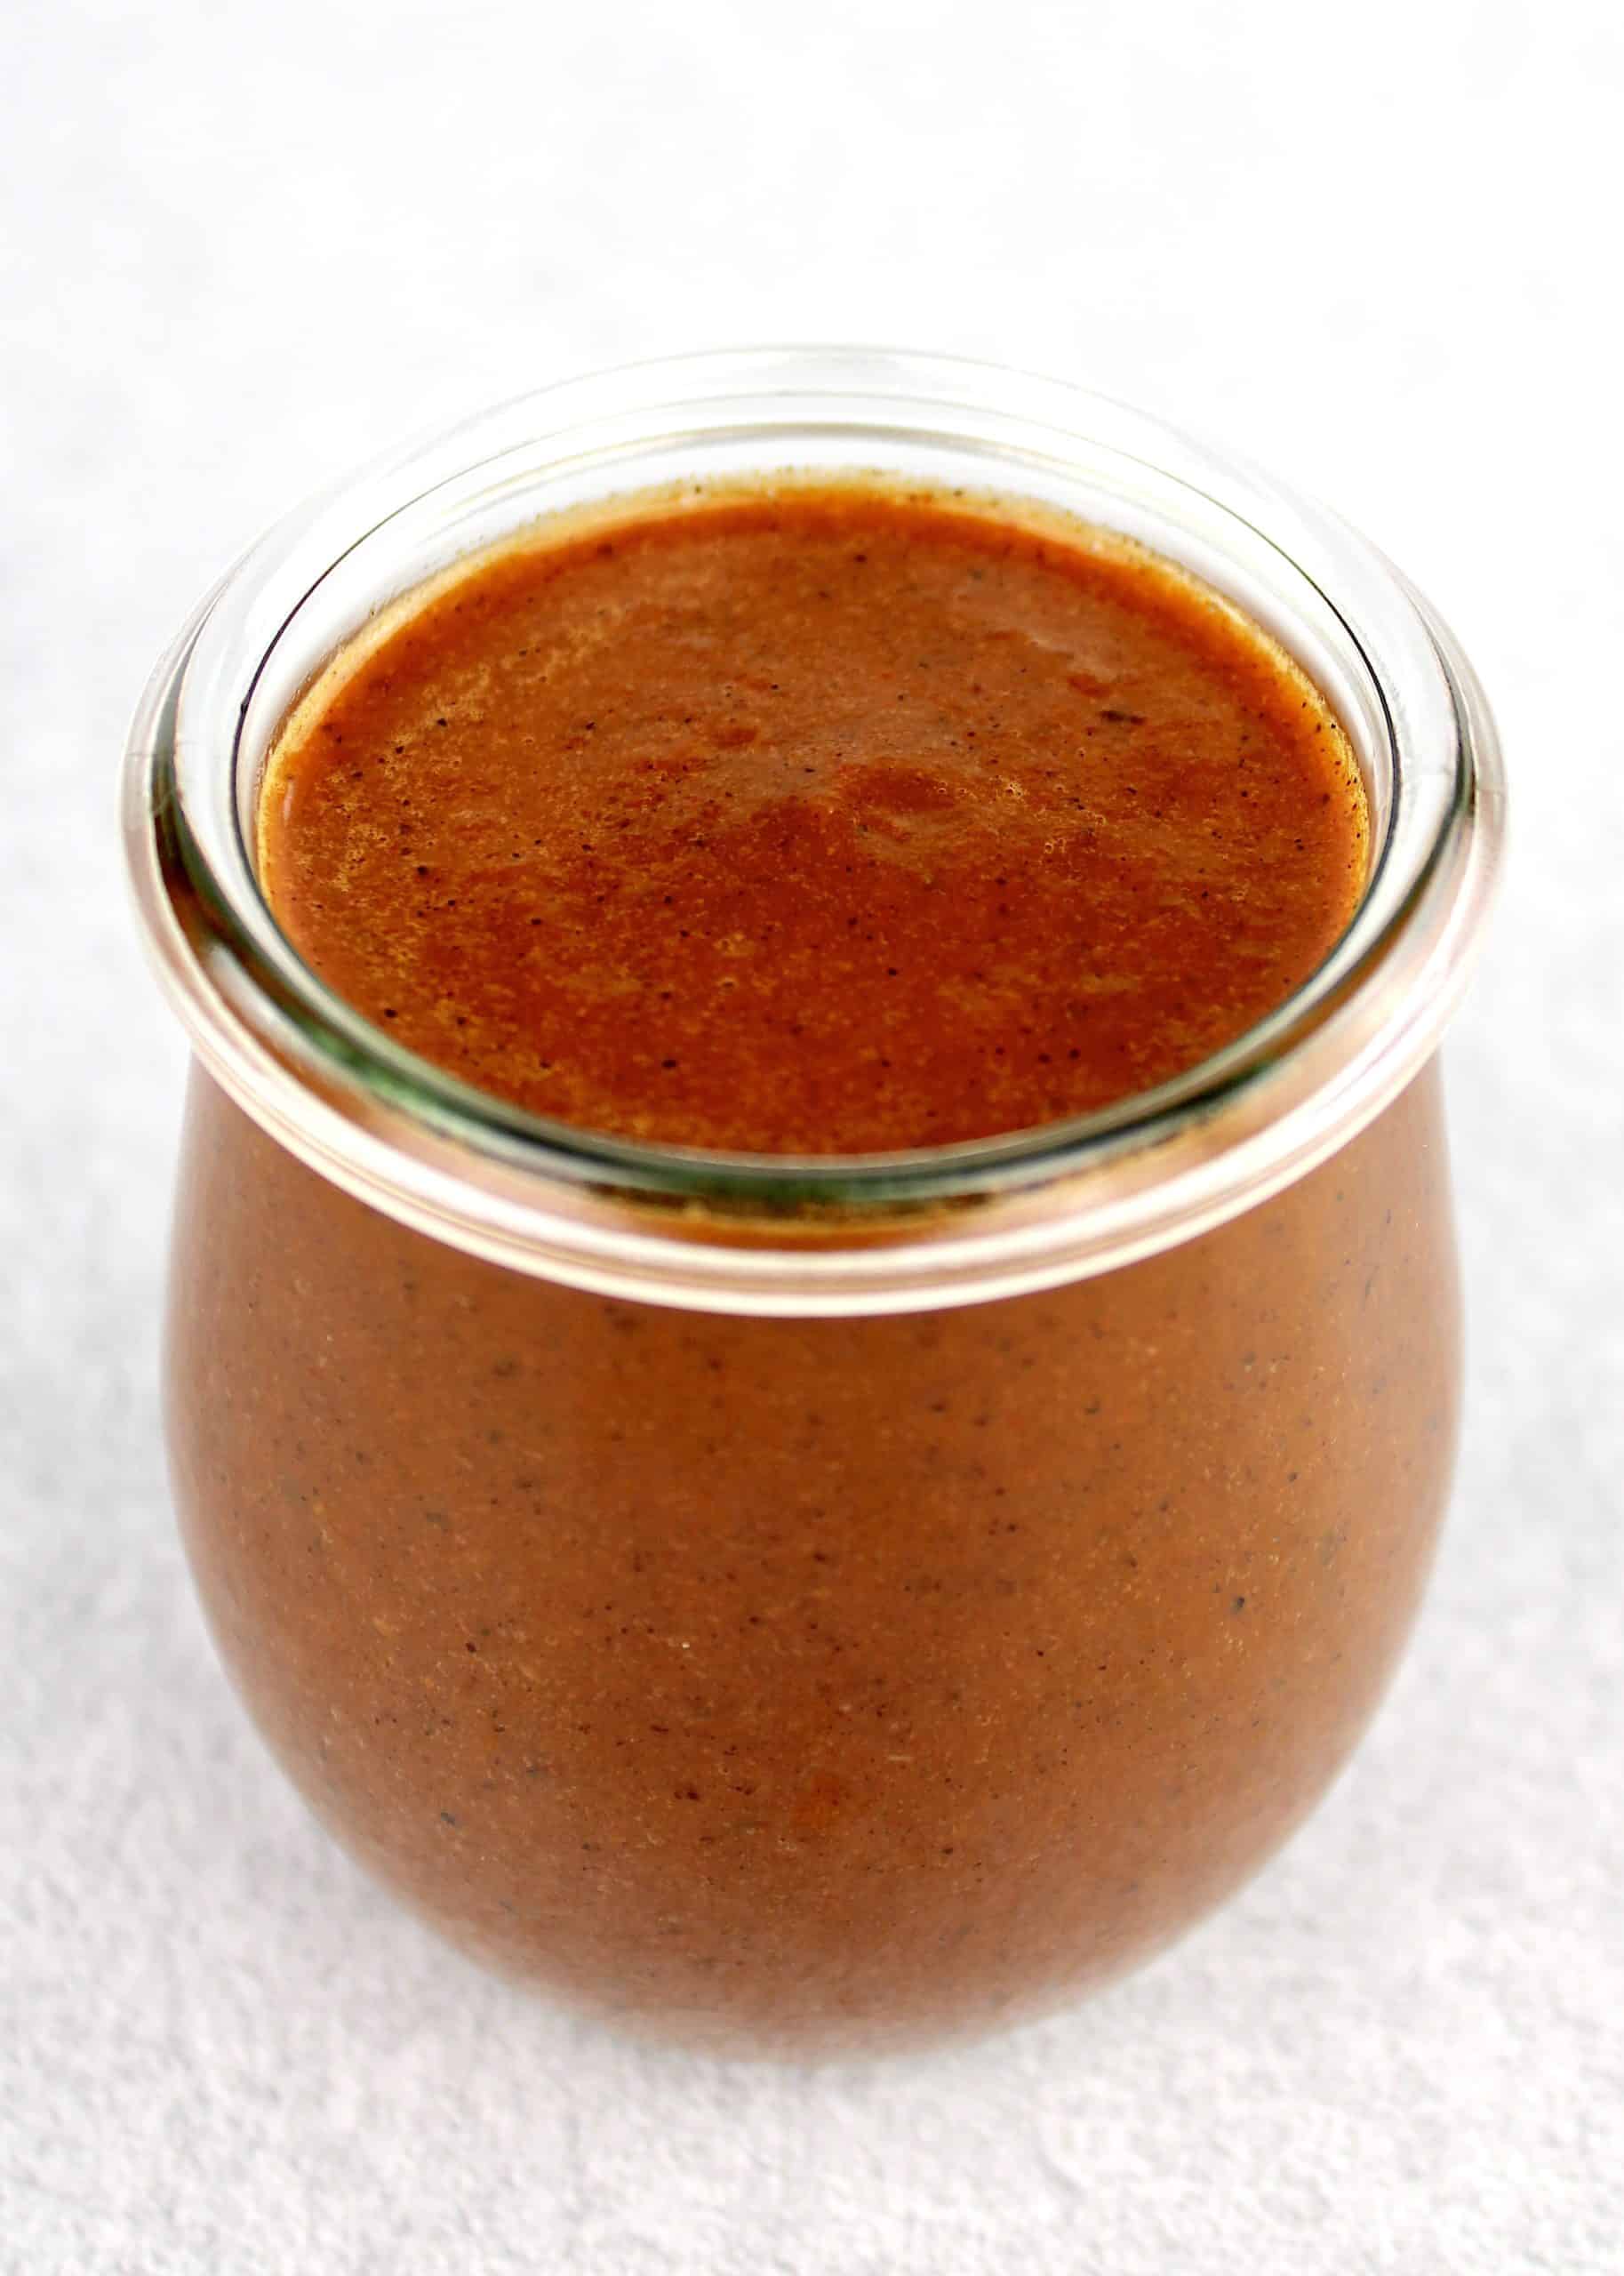 Keto Enchilada Sauce in open glass jar